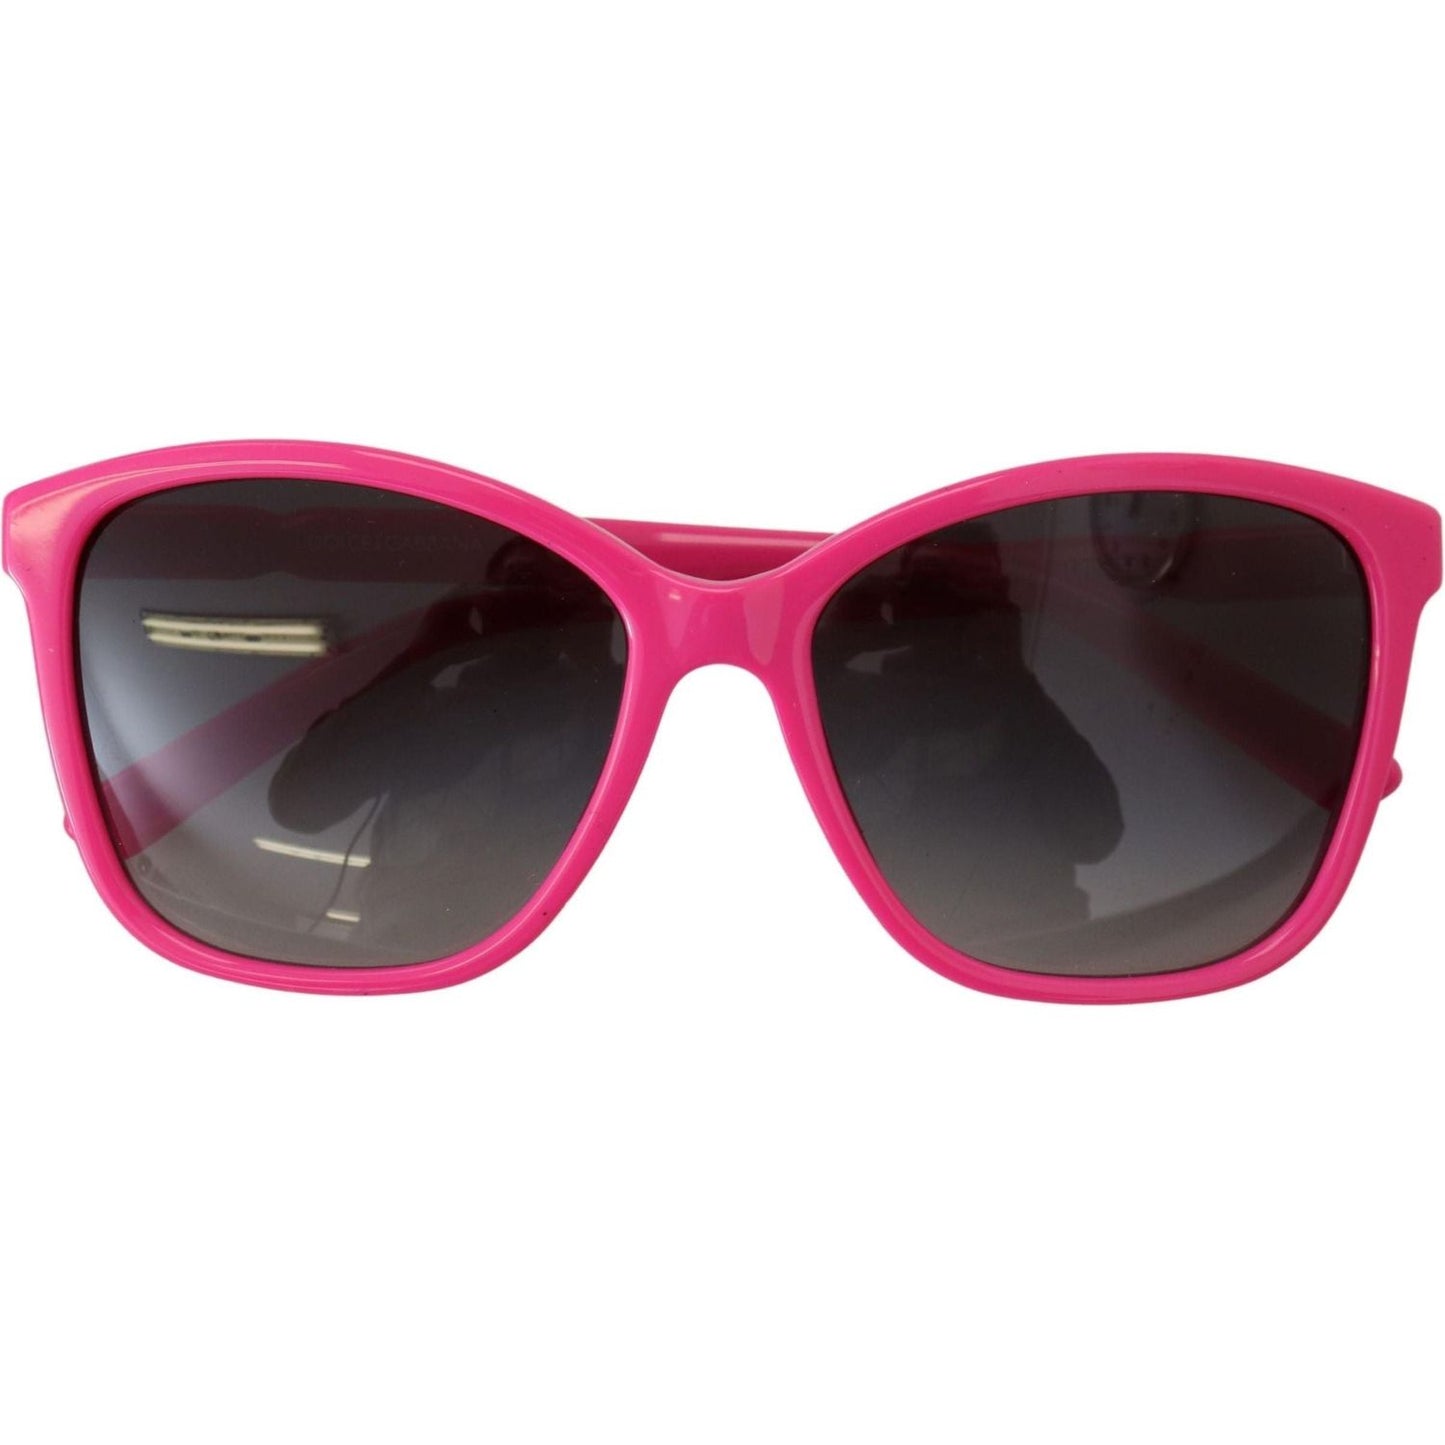 Dolce & Gabbana Elegant Pink Round Sunglasses for Women pink-acetate-frame-round-shades-dg4170m-women-sunglasses IMG_4611-scaled-db5817d6-180.jpg